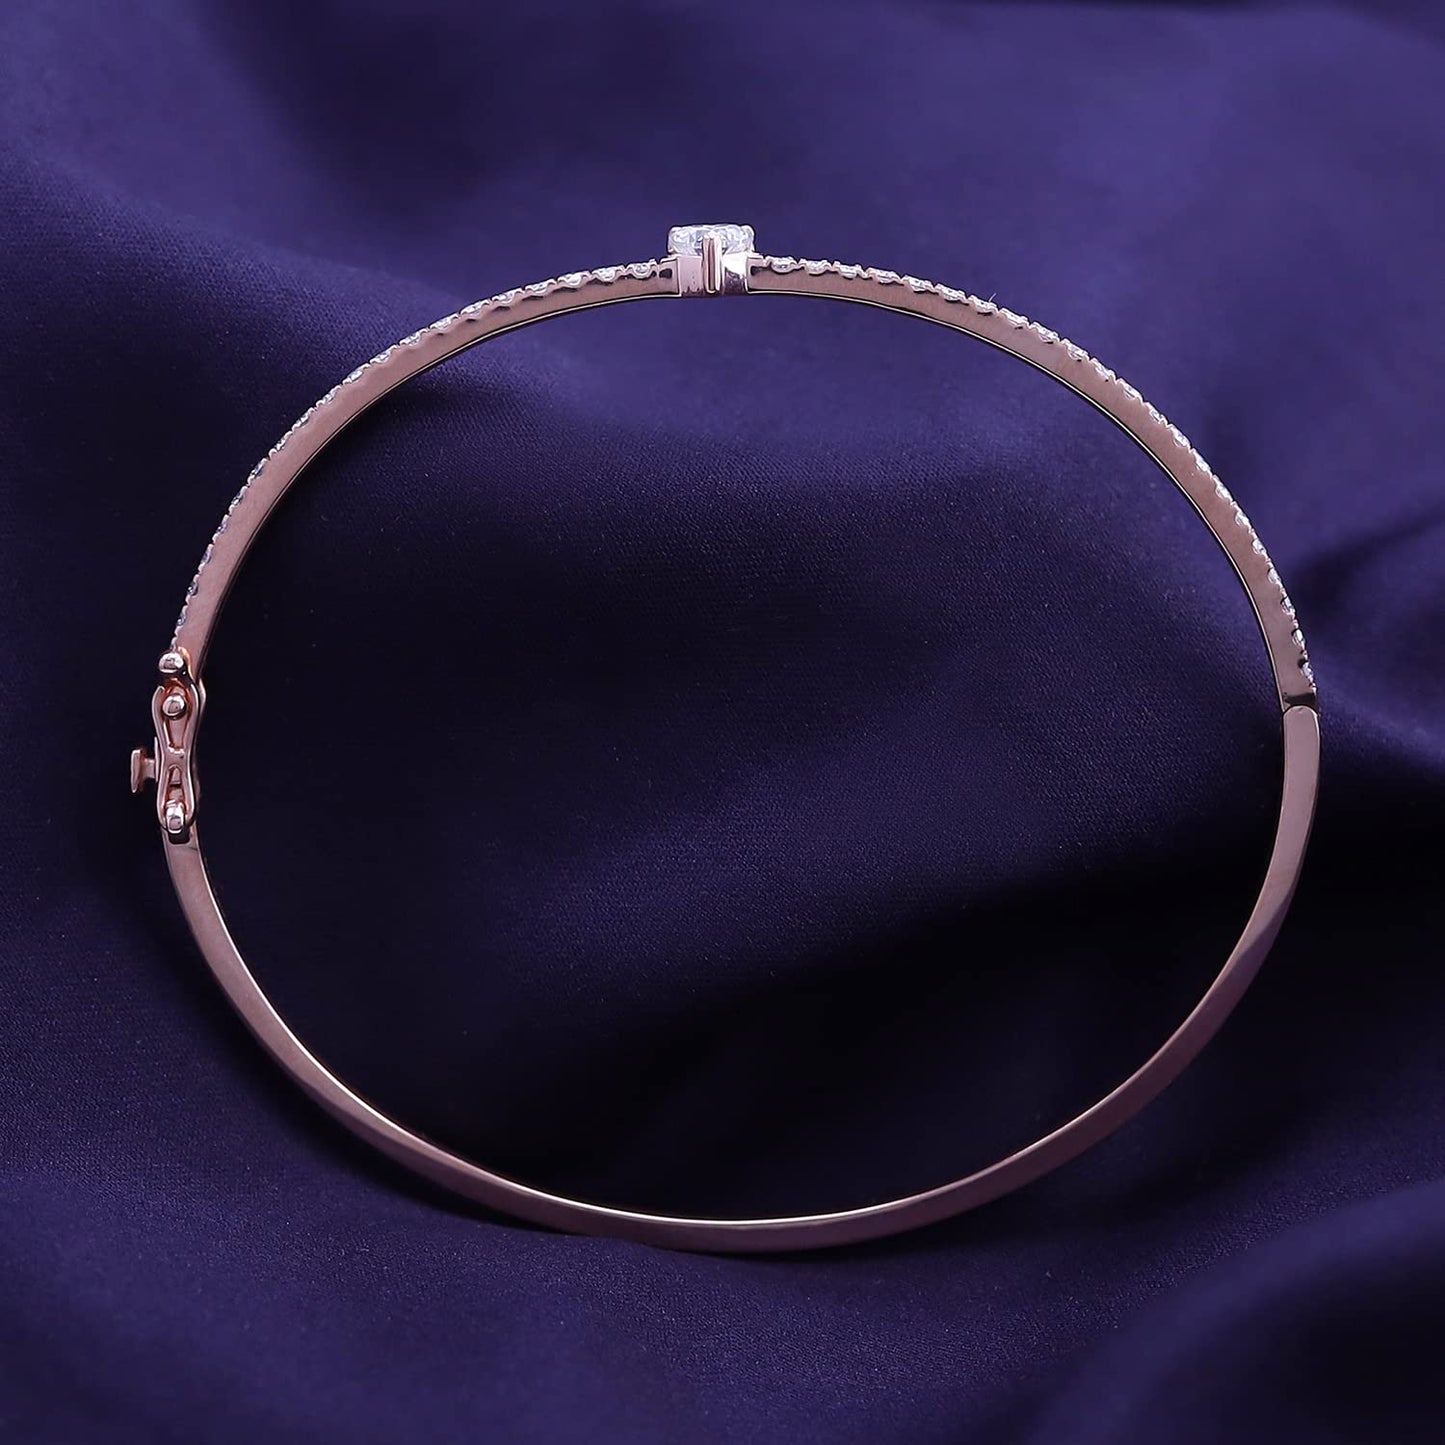 1 Carat Heart & Round Cut Lab Created Moissanite Diamond Tennis Bangle Bracelet In 925 Sterling Silver